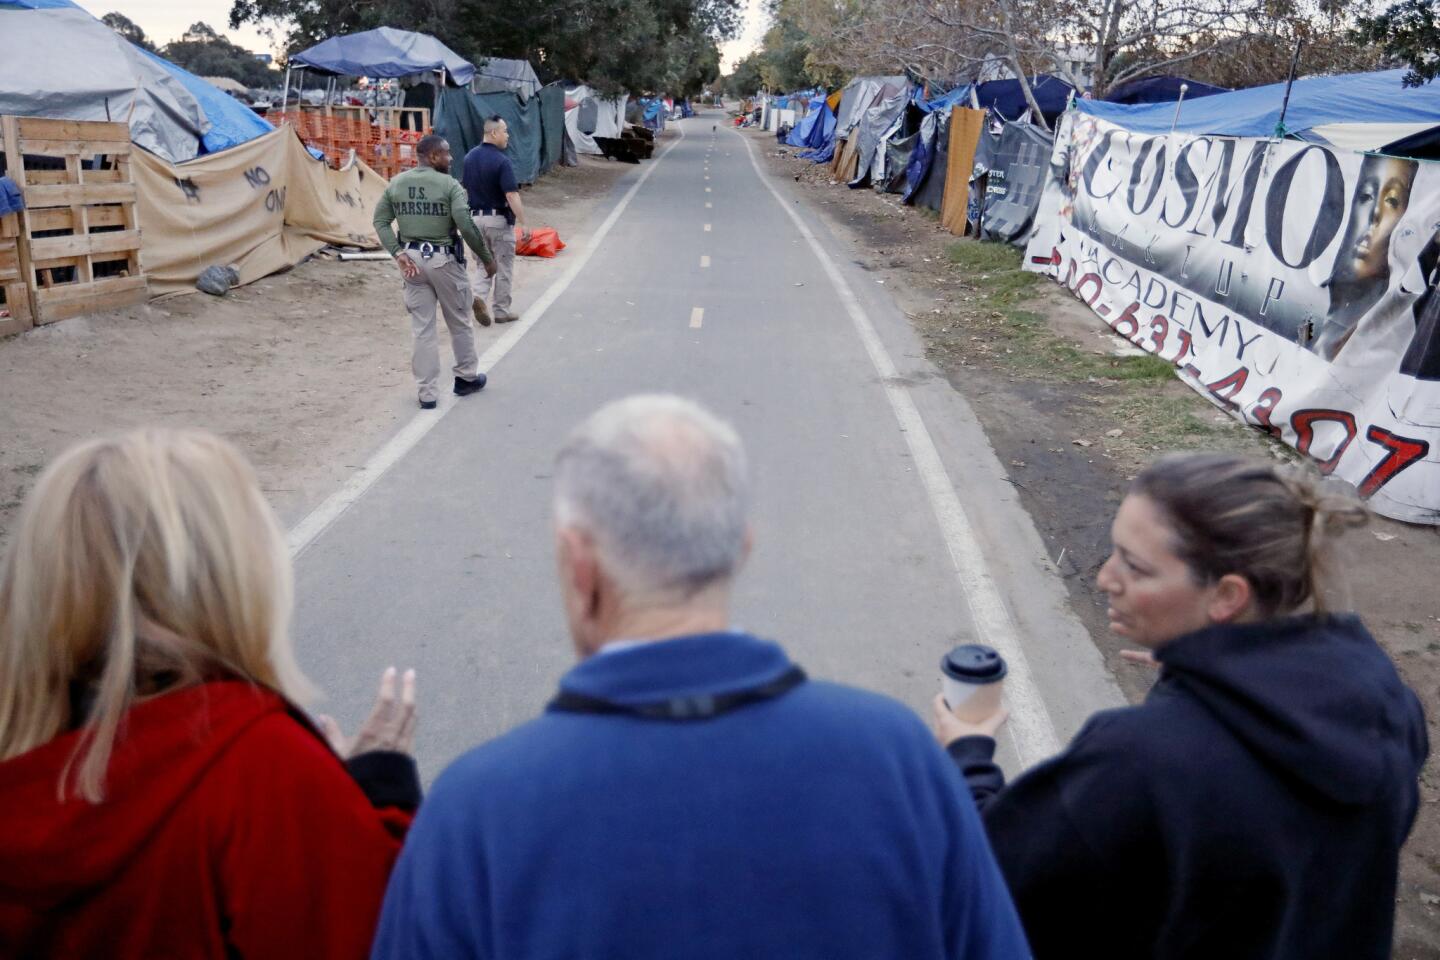 Judge visits homeless encampment